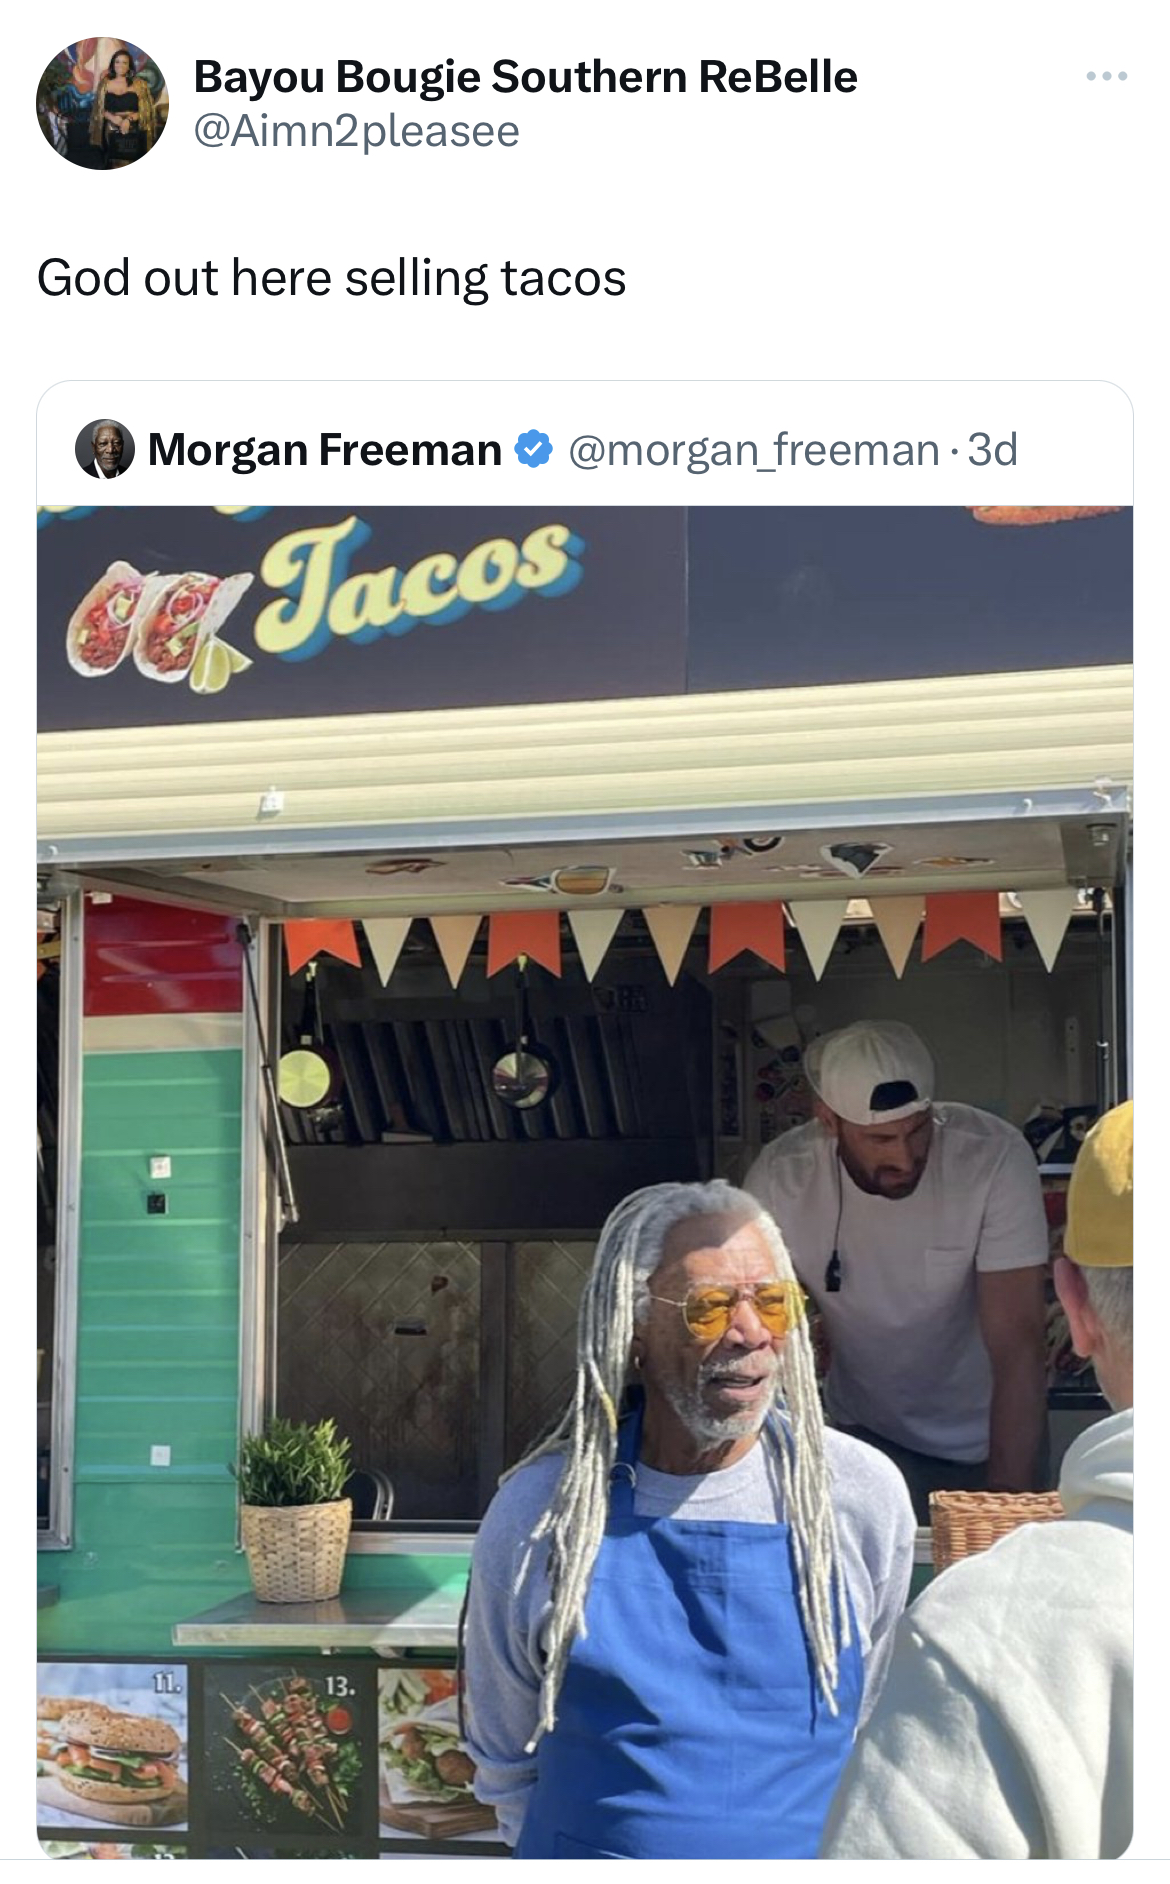 savage tweets roasting celebs - Morgan Freeman - Bayou Bougie Southern ReBelle God out here selling tacos Morgan Freeman Tacos www.